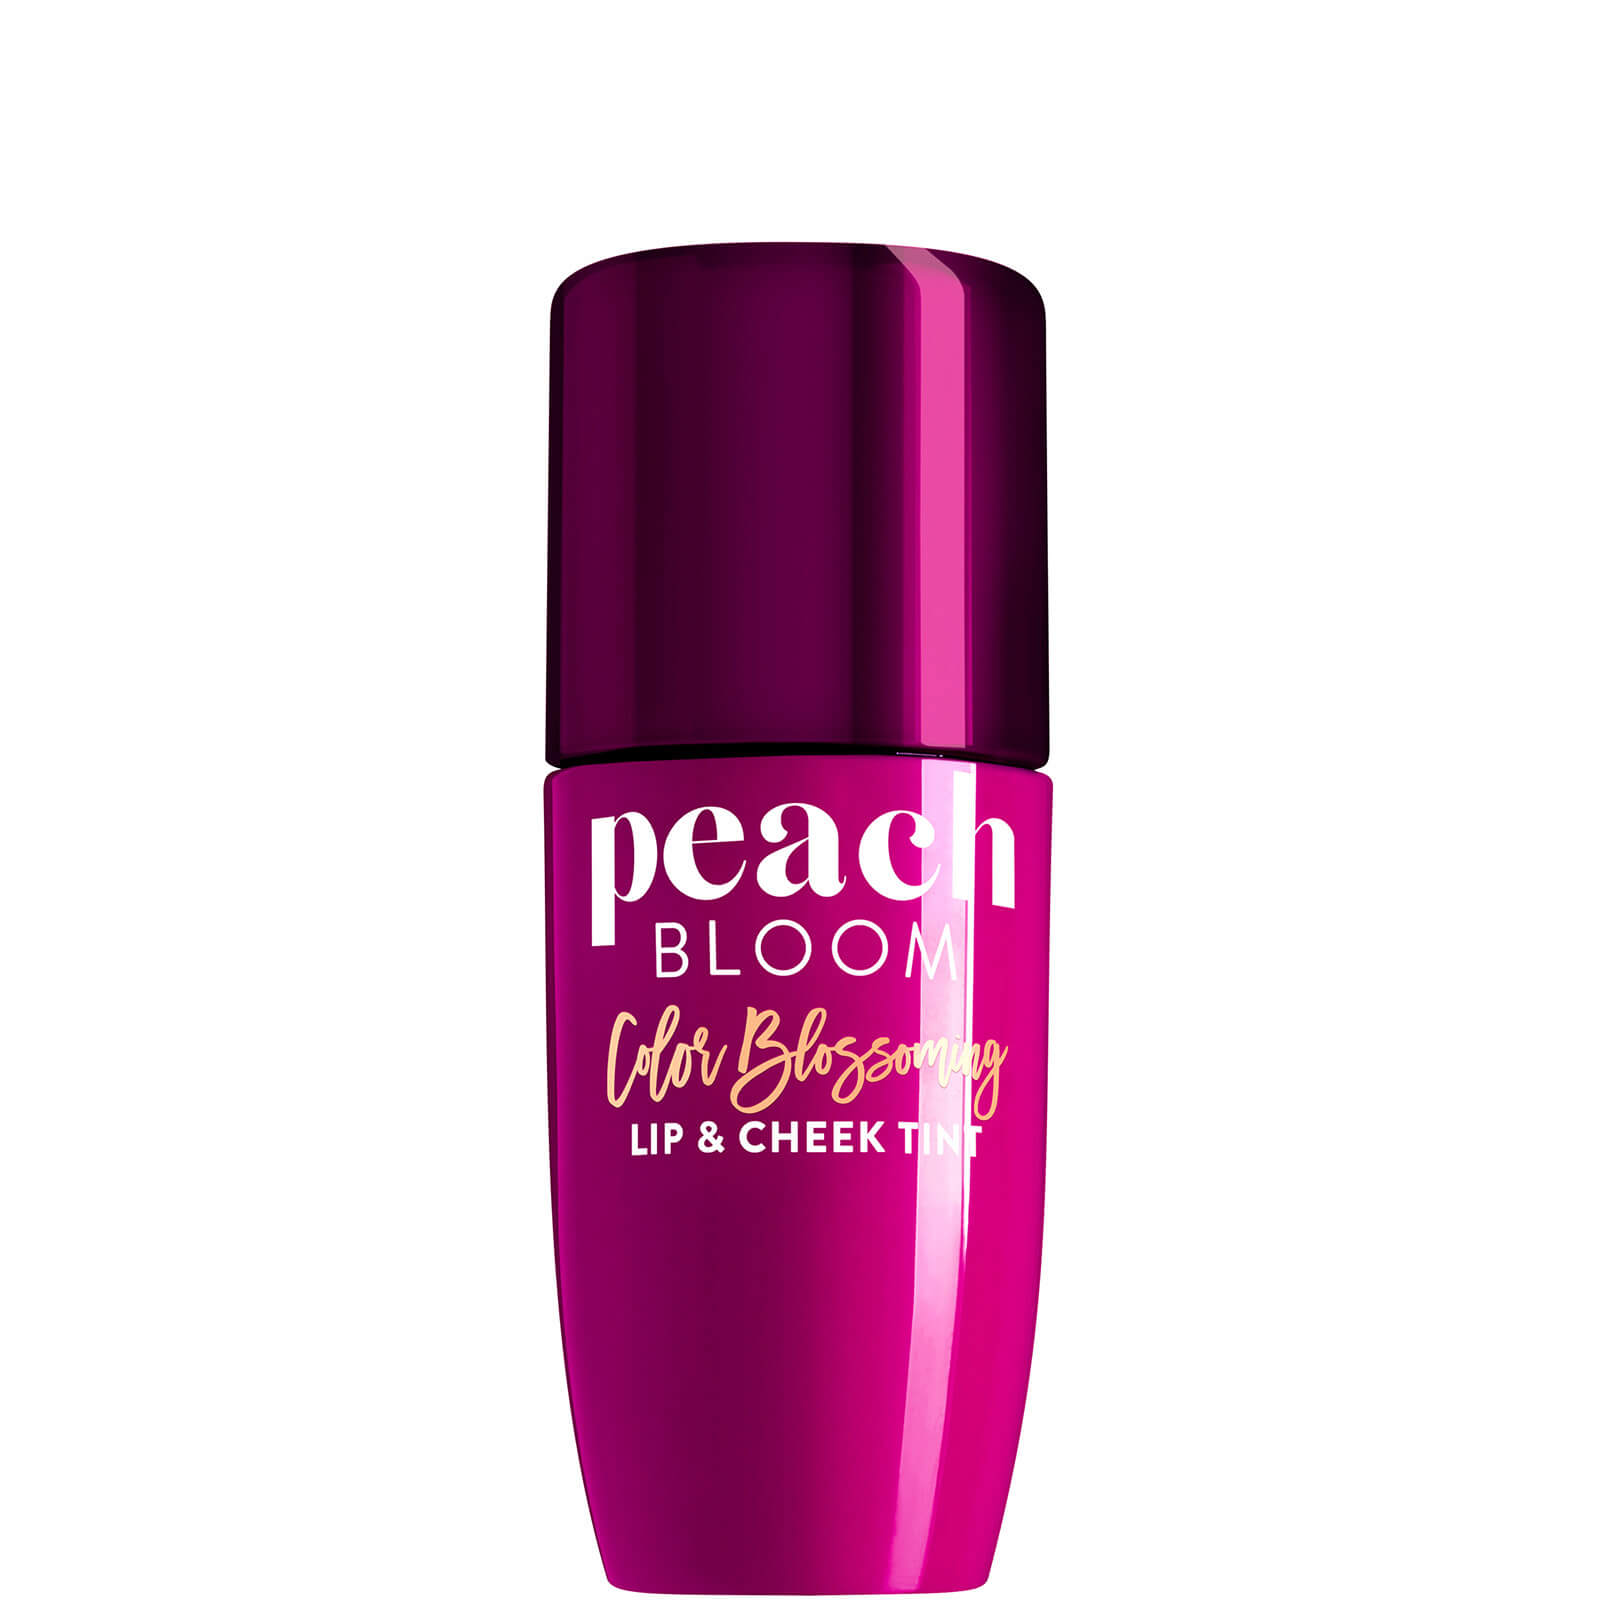 Too Faced Peach Bloom Colour Blossoming Lip and Cheek Tint (Various Shades) - Grape Pop Glow